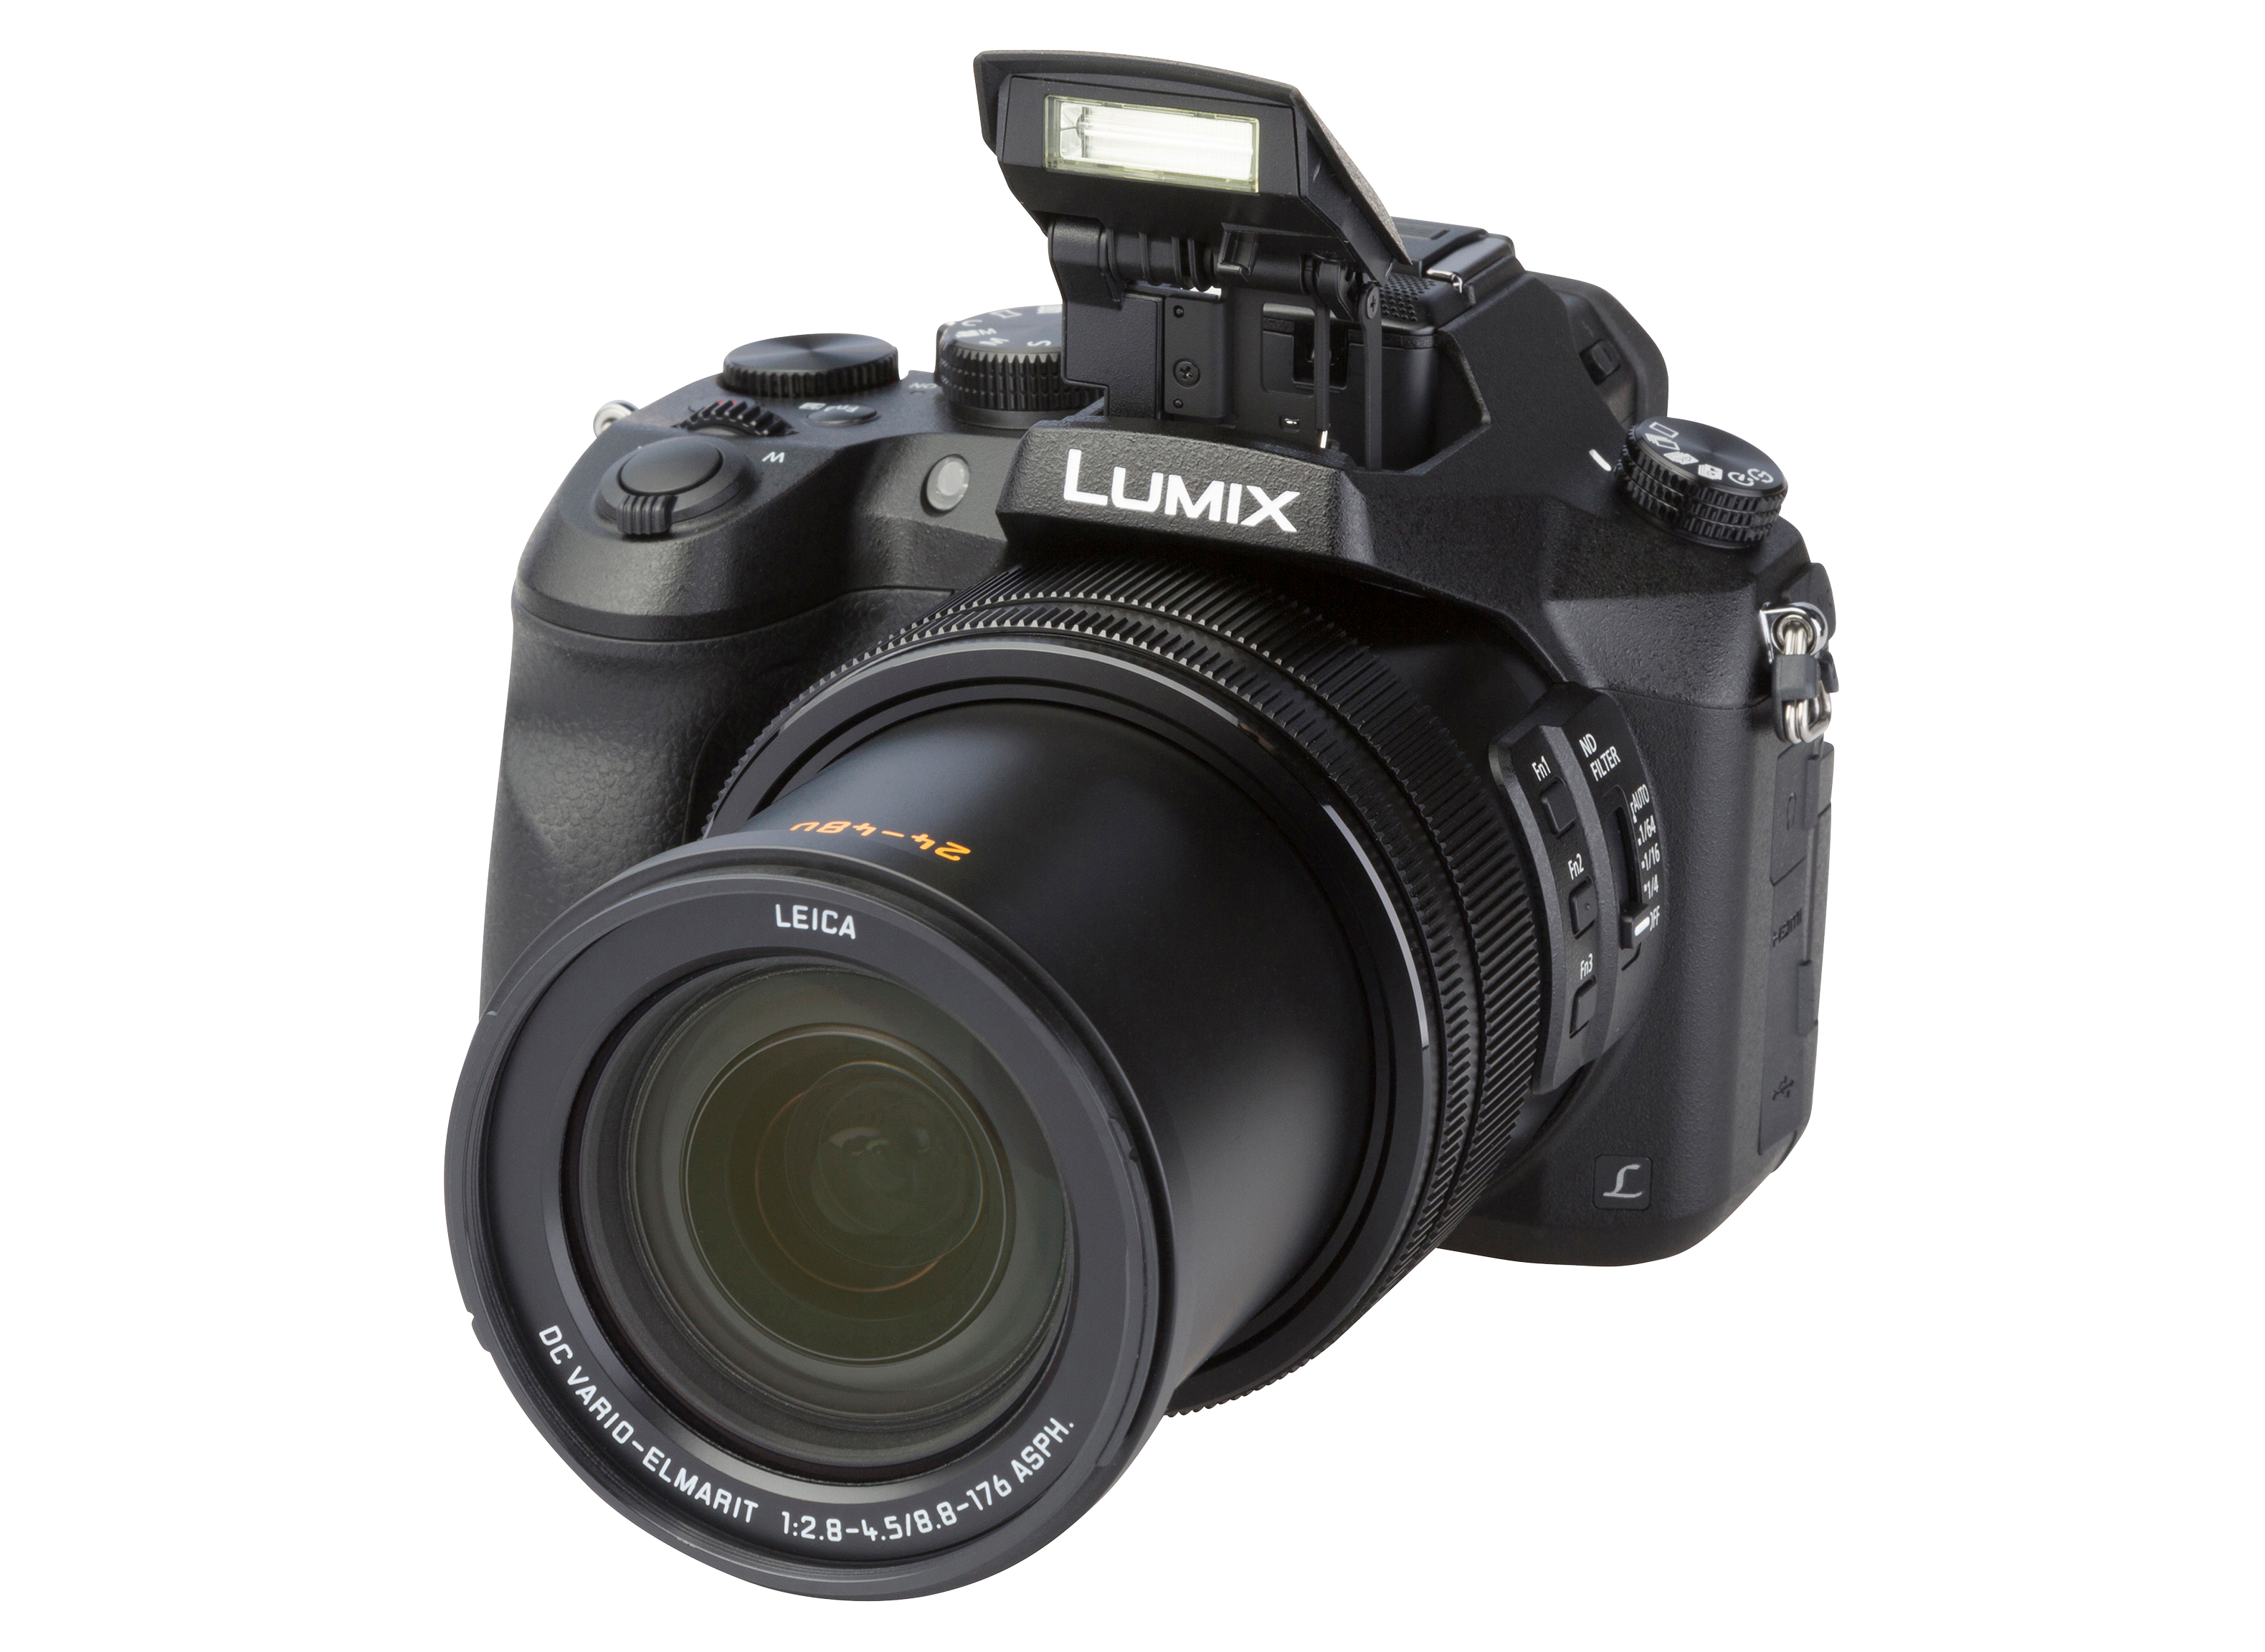 Panasonic Lumix DMC-FZ2500 Camera Review - Consumer Reports